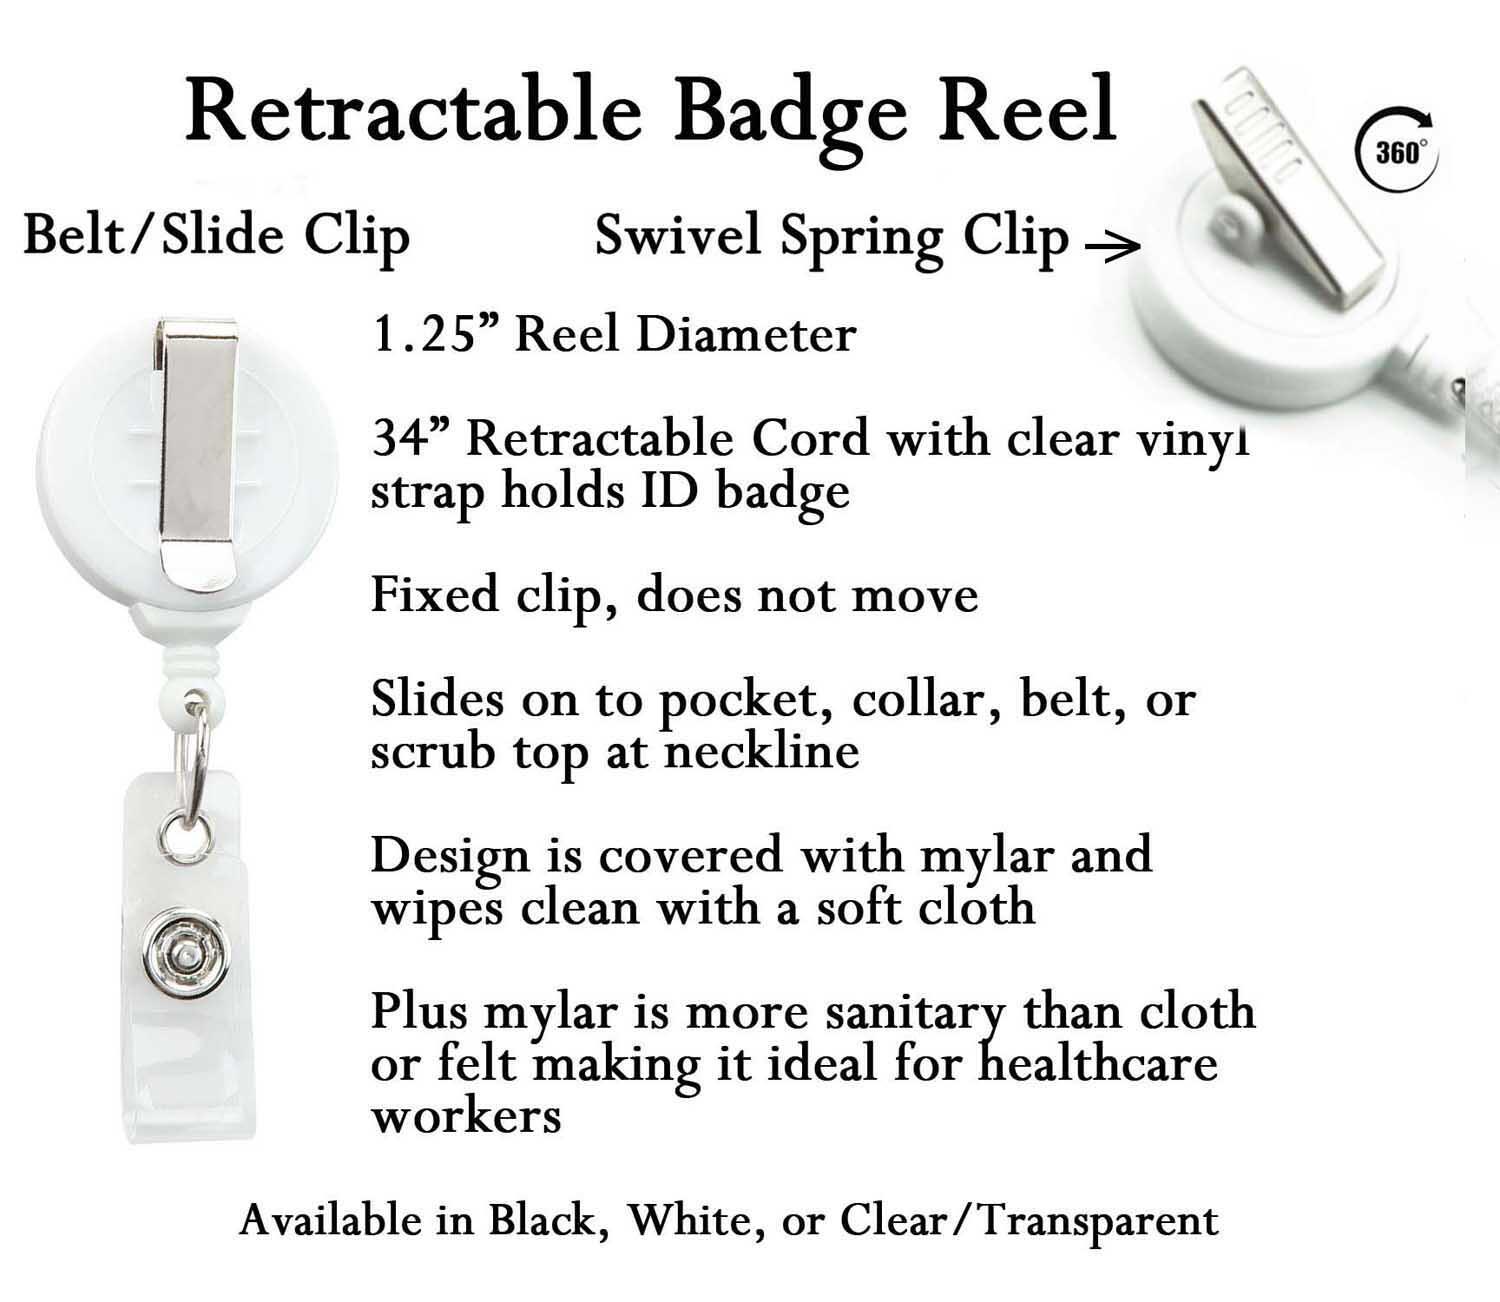 Interchangeable Badge Reel Base Interchangeable Badge Holder 